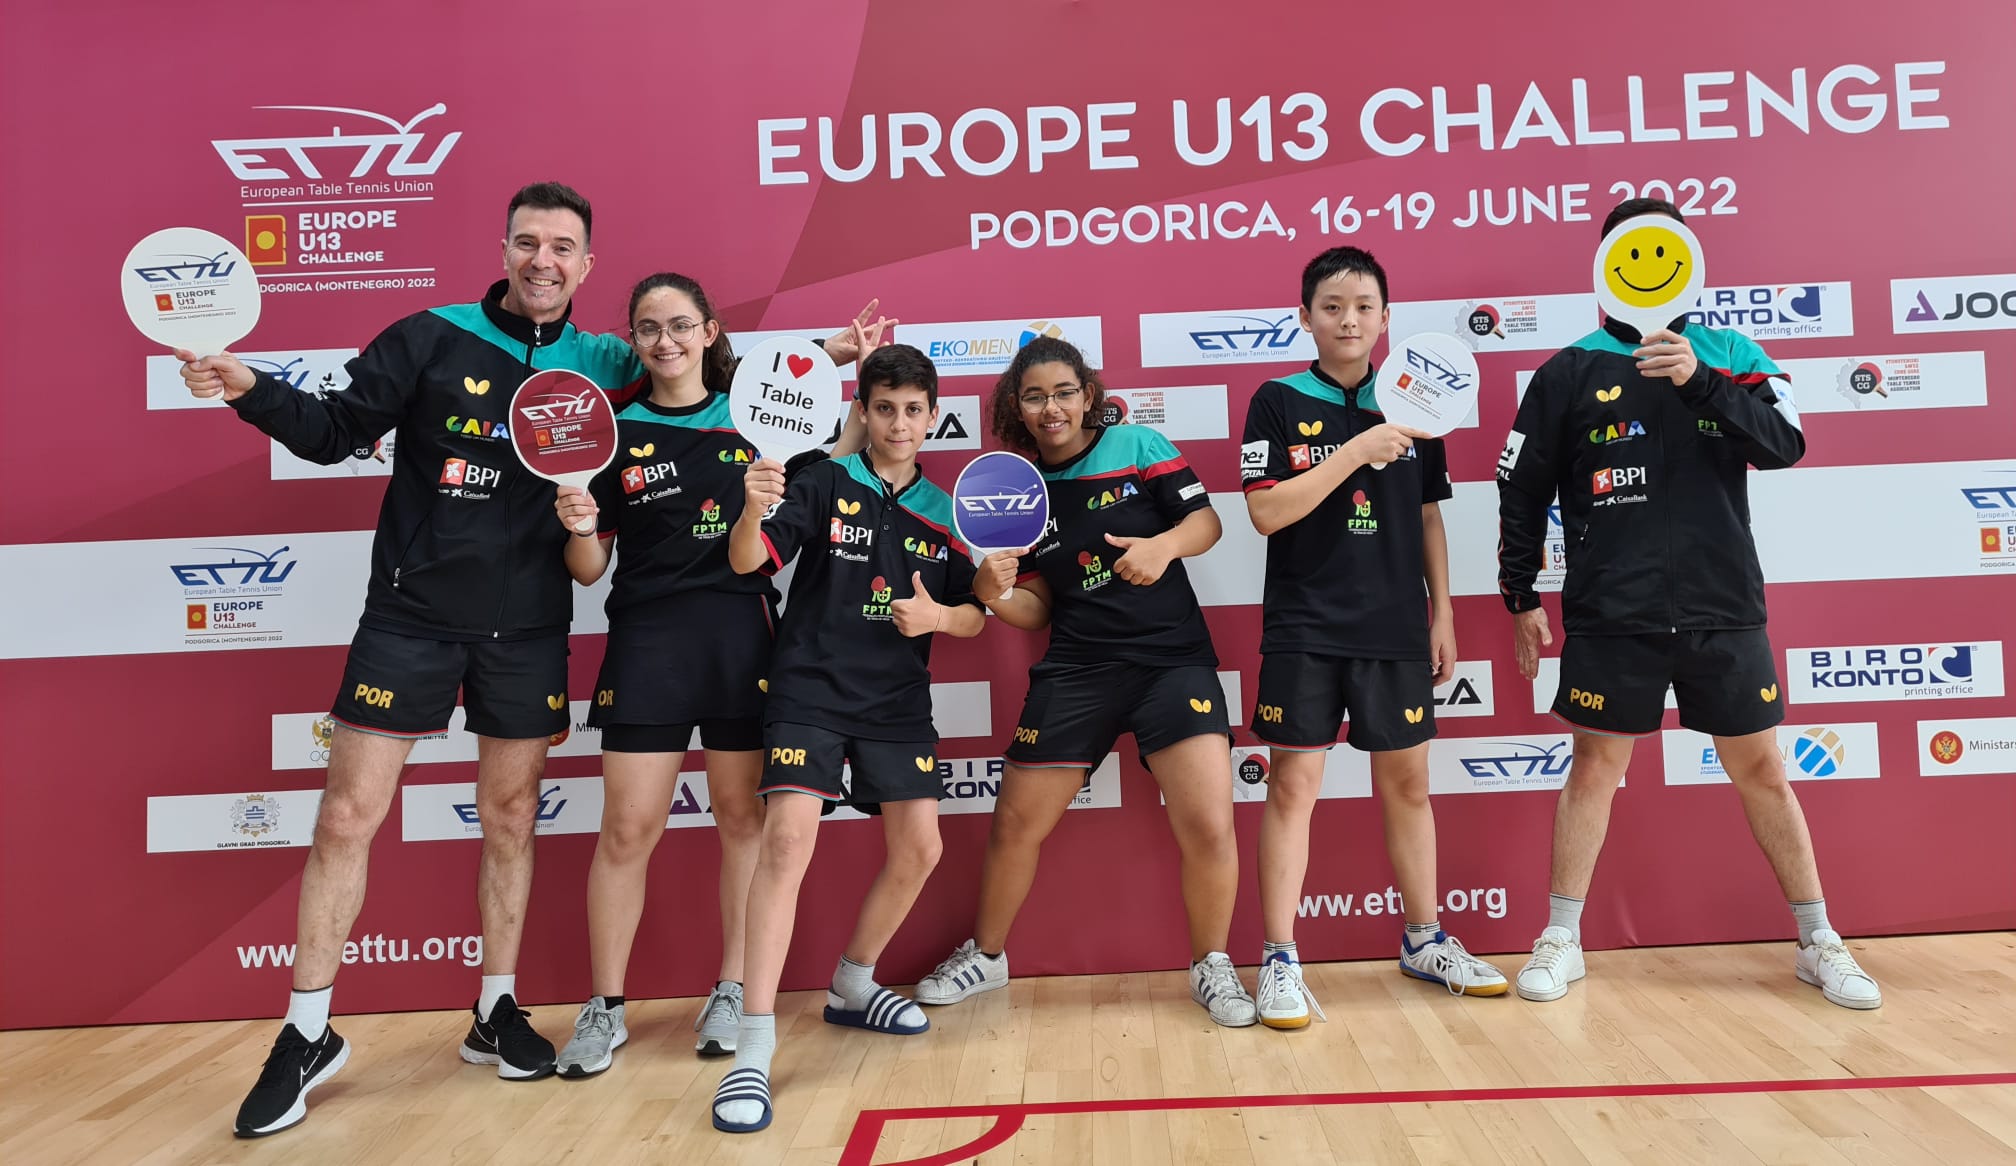 Portugal vence grupo no Europe U13 Challenge